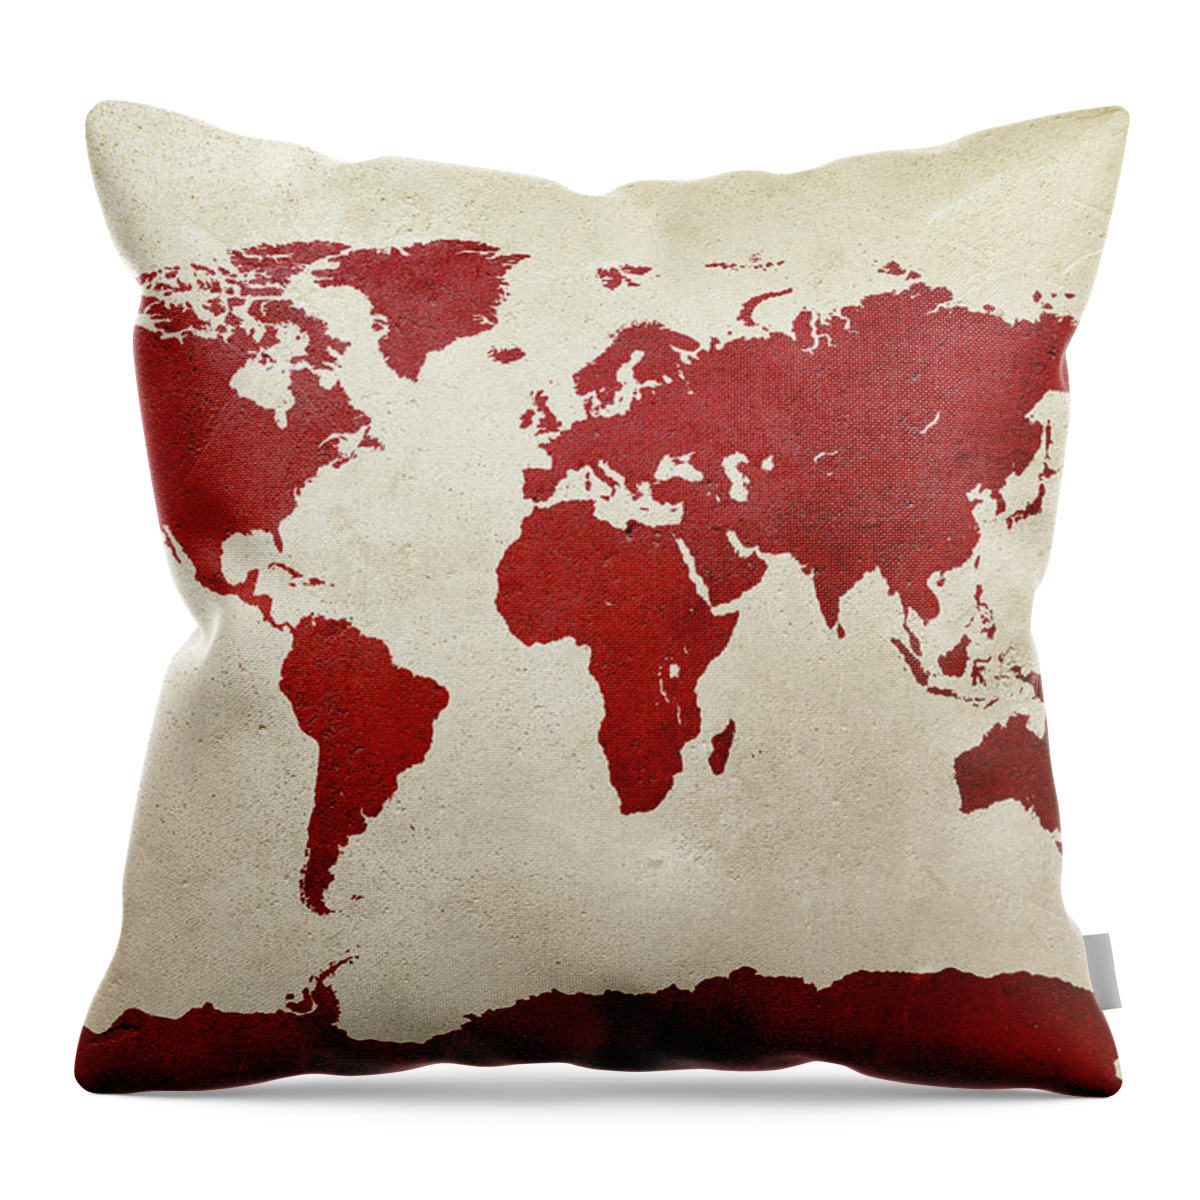 World Map Throw Pillow featuring the digital art World Map Red by Michael Tompsett